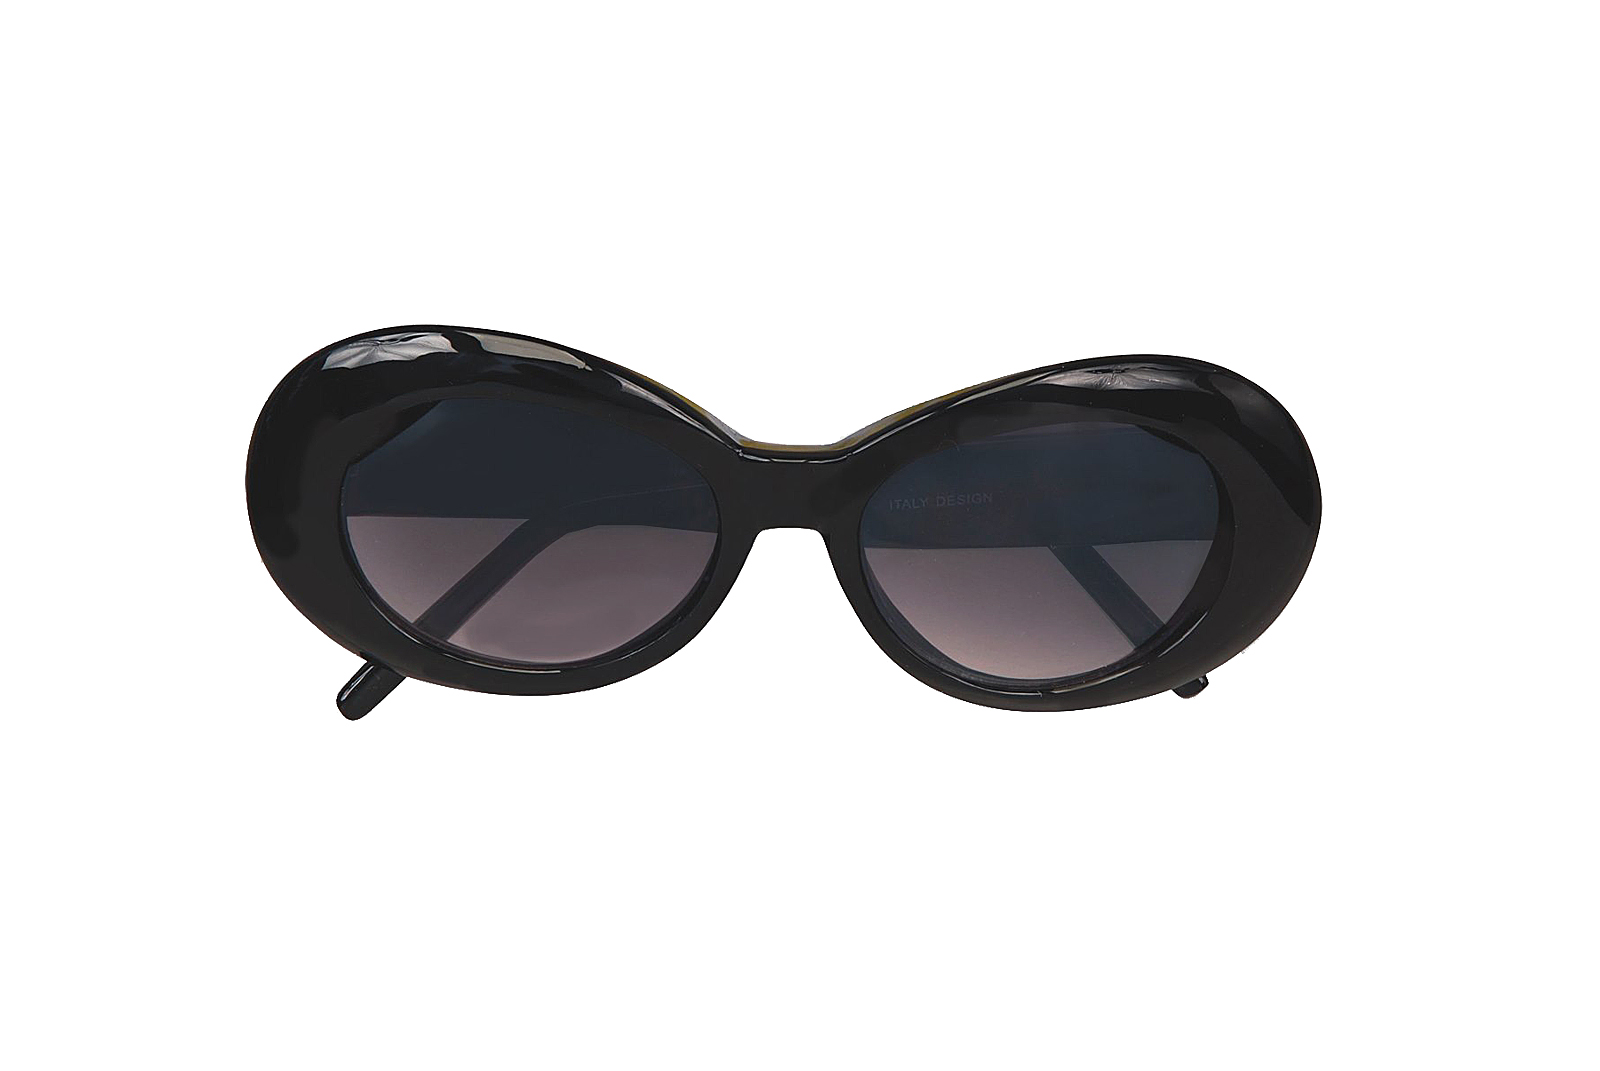 Forum Novelties Inc Women's Mod Black Sunglasses - Black - One-Size